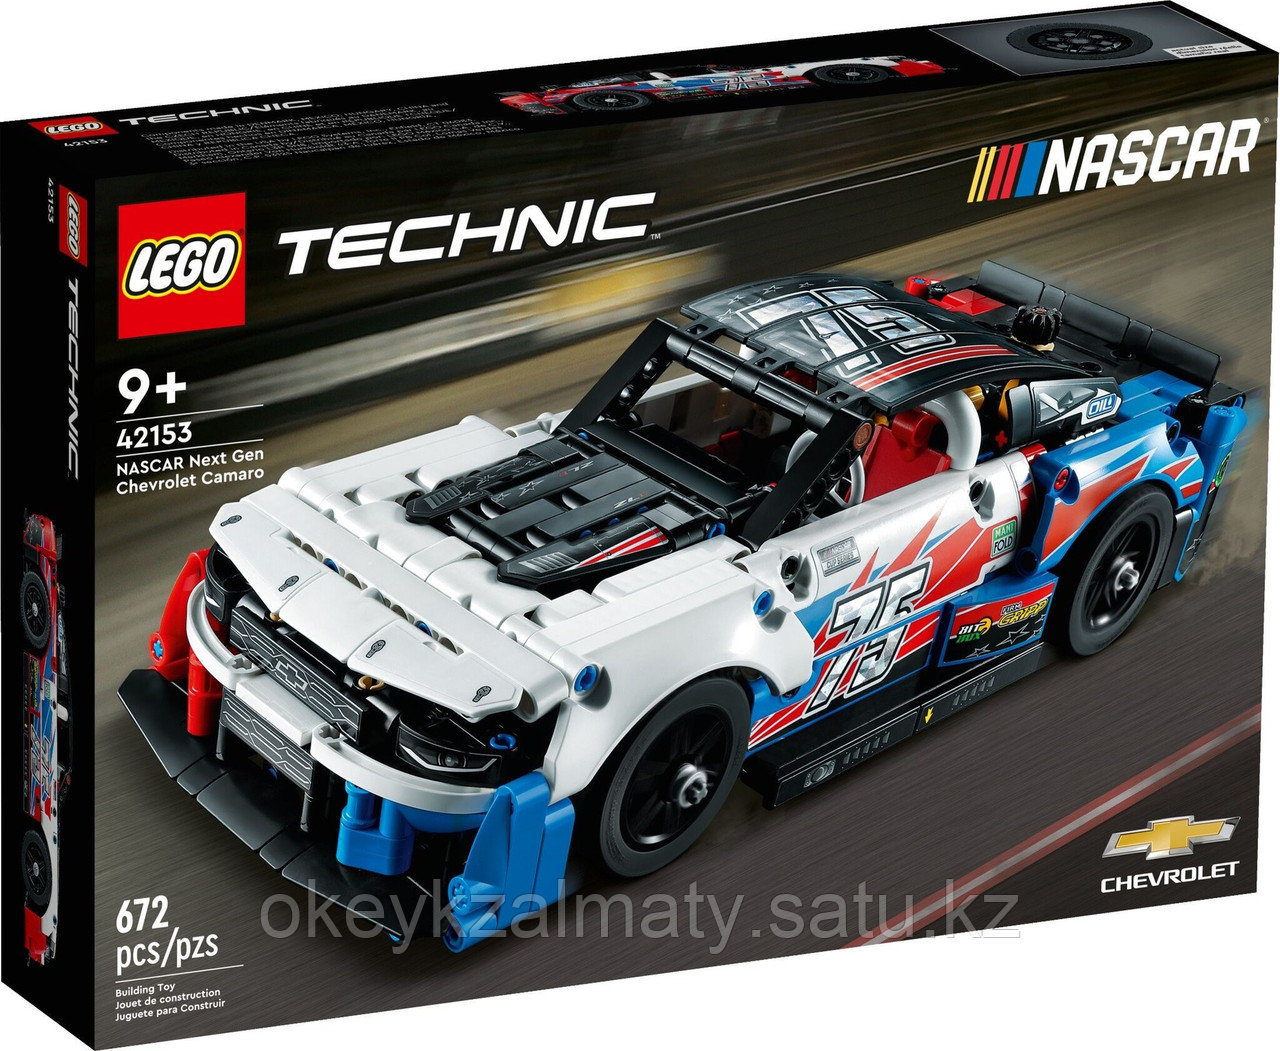 LEGO Technic: NASCAR® Next Gen Chevrolet Camaro ZL1, 42153